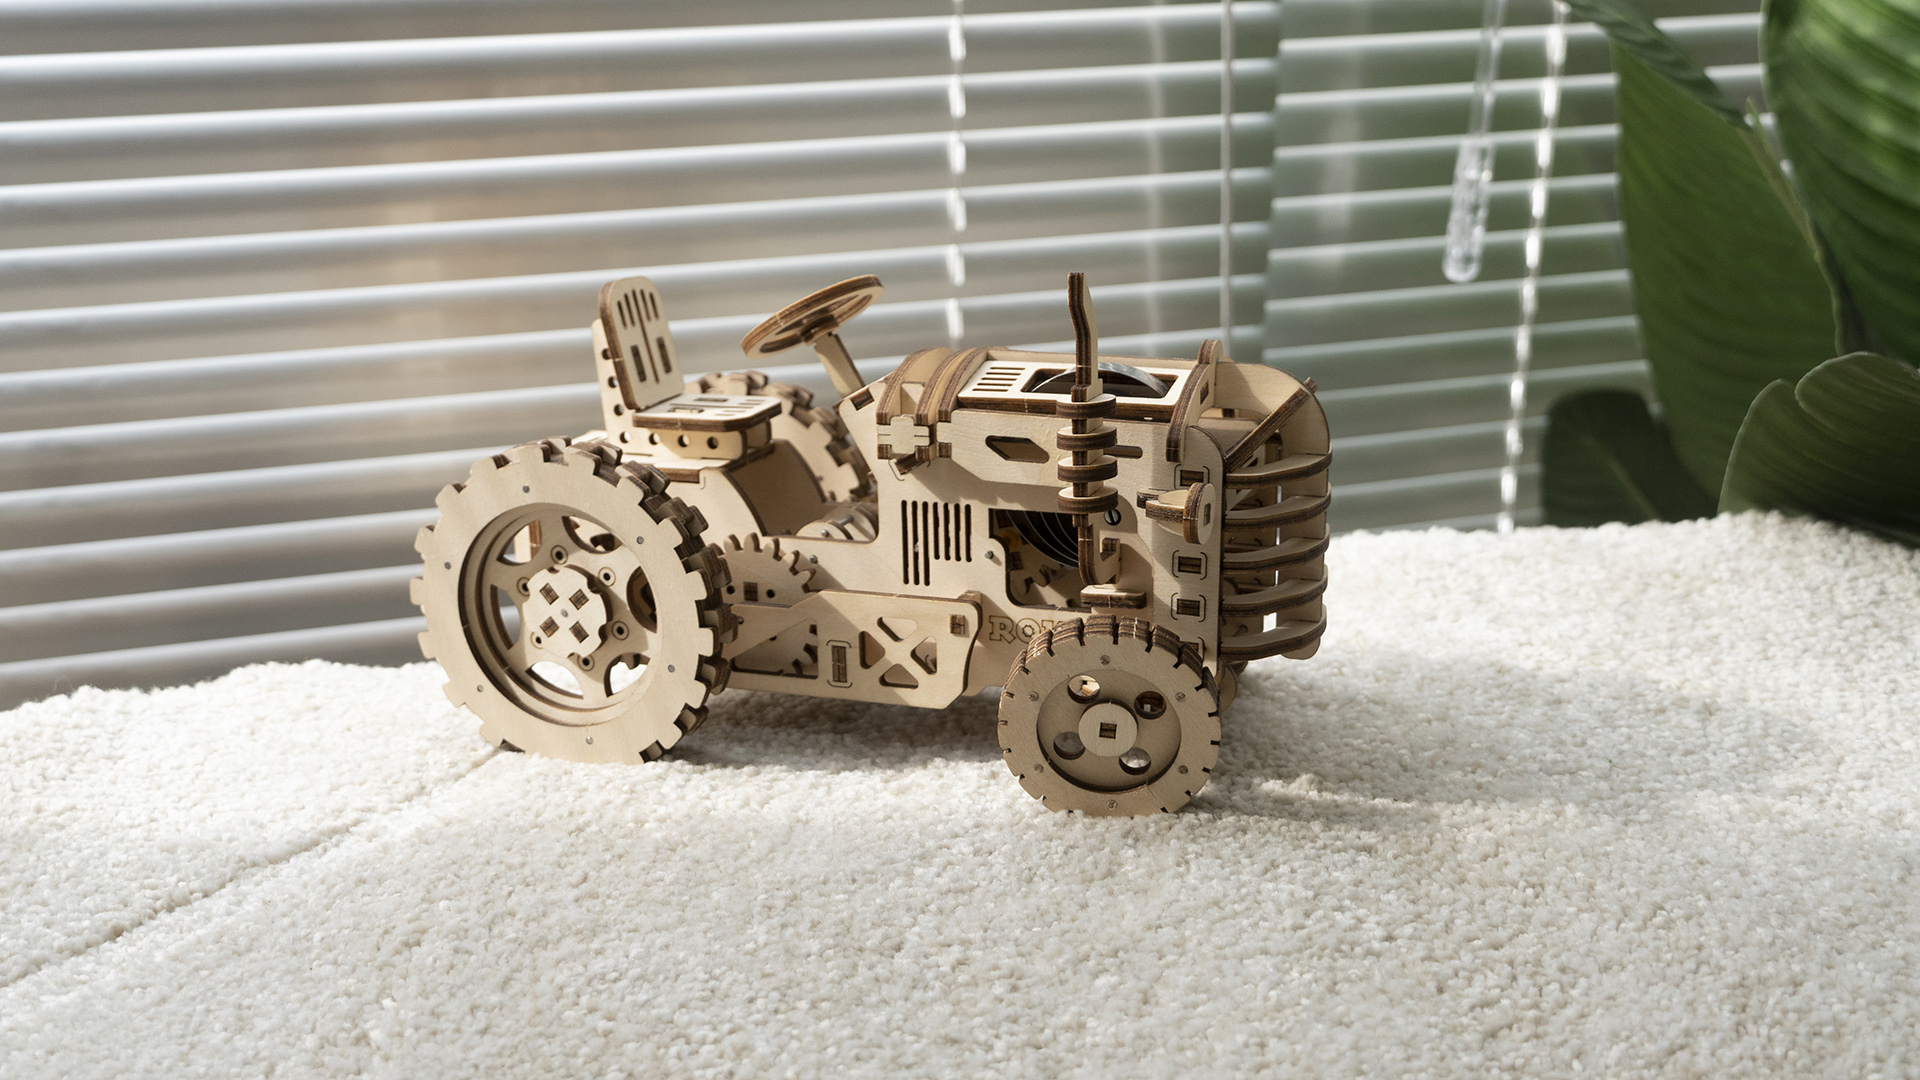 ROKR TRACTOR MECHANICAL GEARS 3D Wooden PUZZLE LK401 135 Piece 